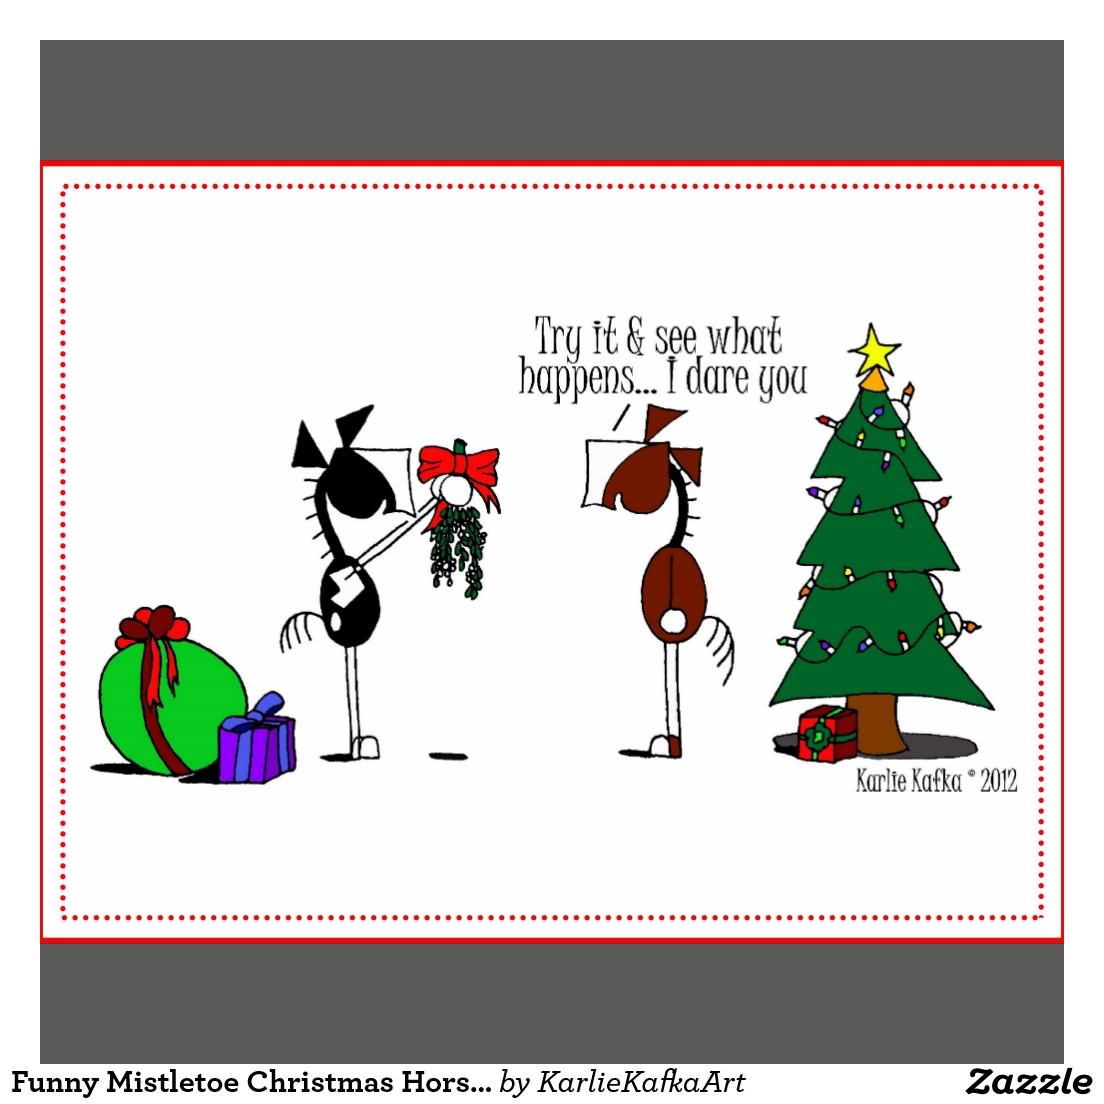 Funny Mistletoe Christmas Horse Cartoon Postcard Image